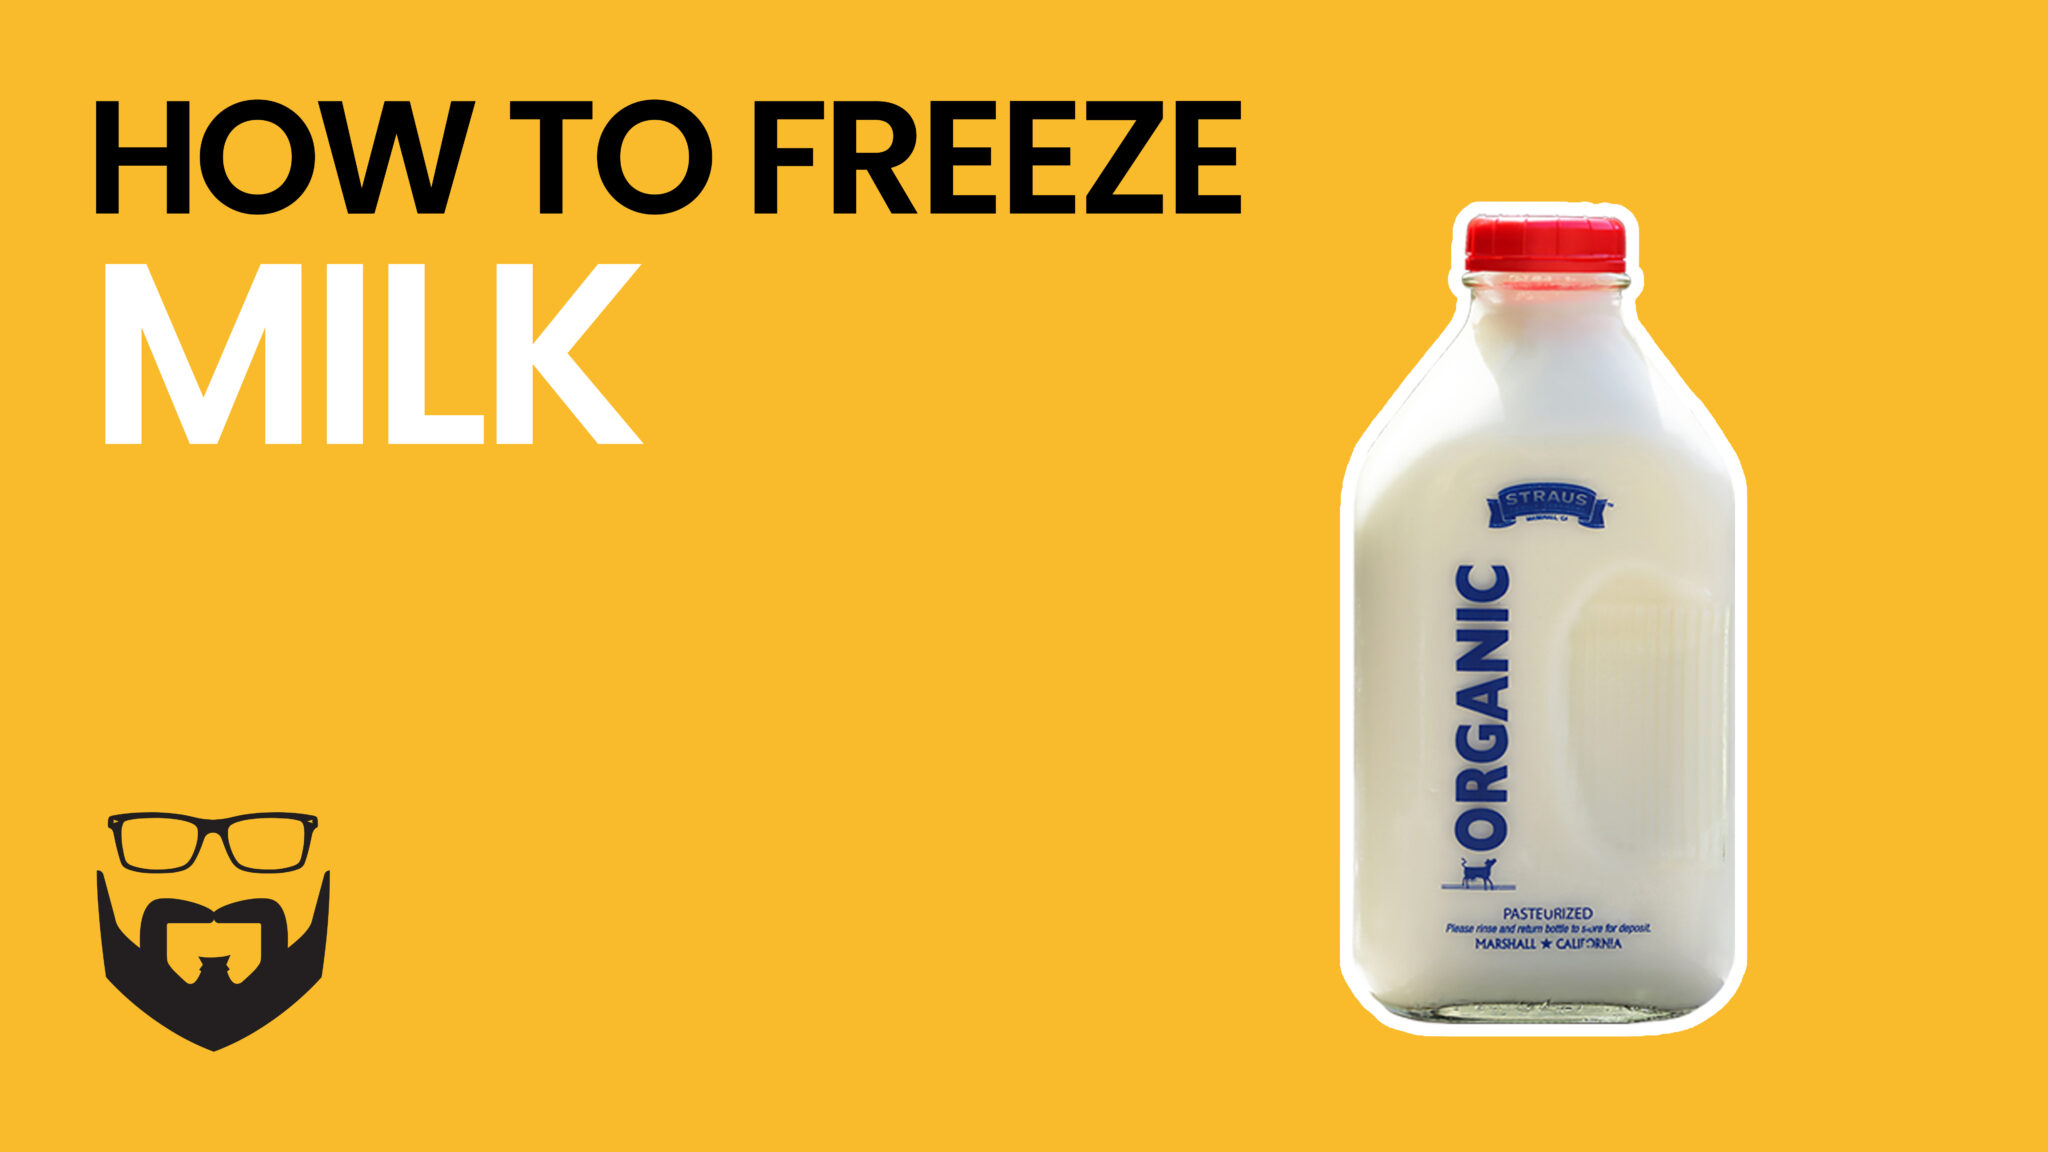 How to Freeze Milk Video - Yellow